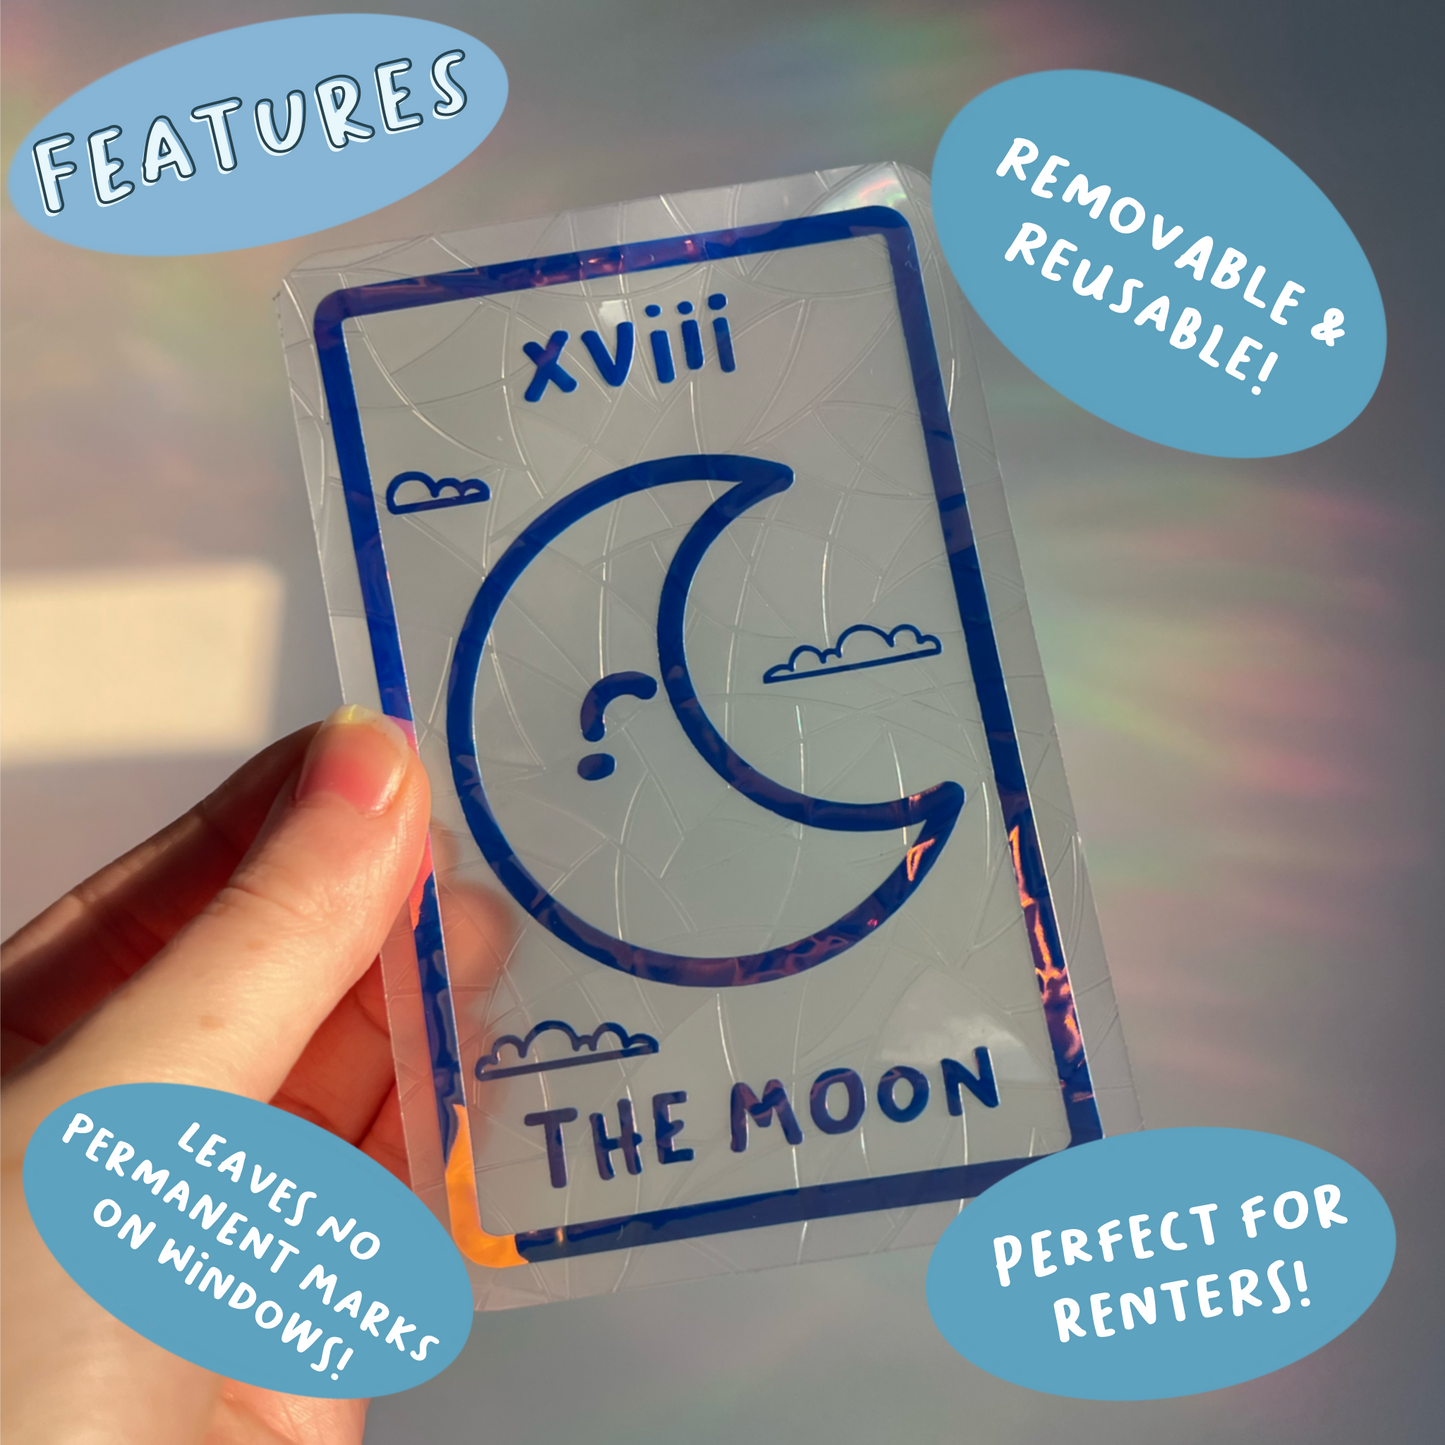 The Moon Tarot Card Suncatcher